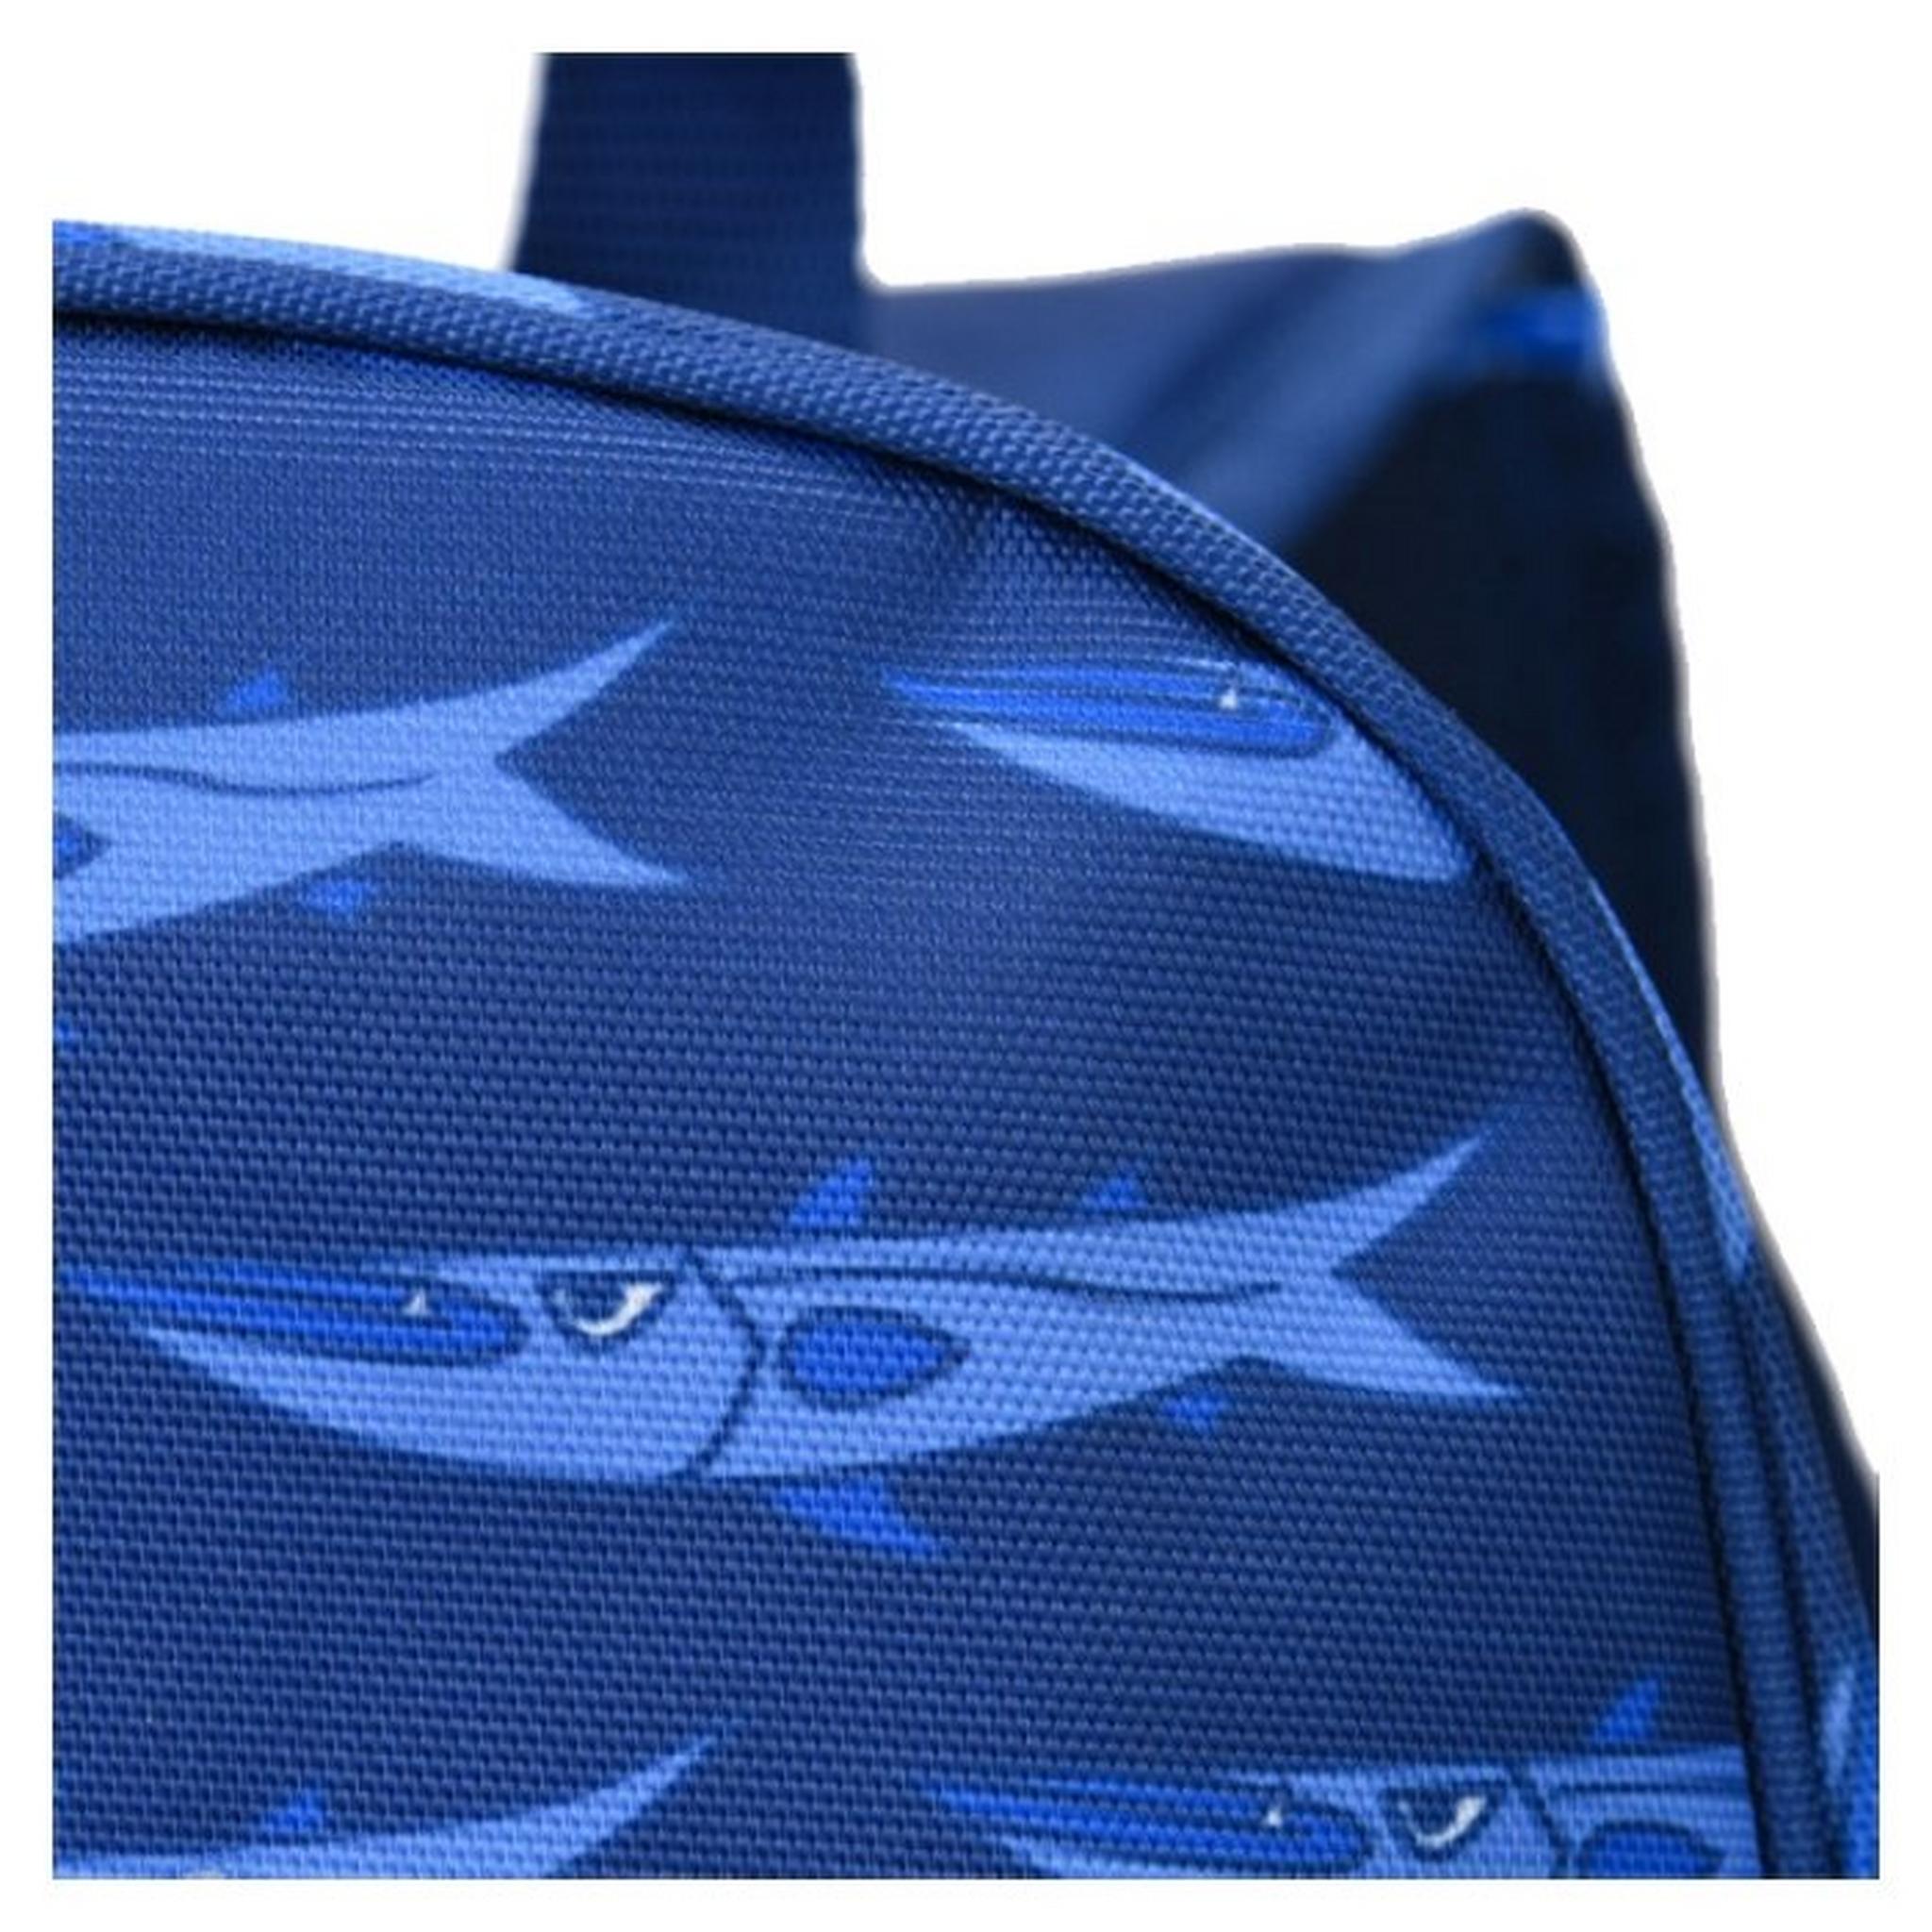 Riwbox Shark Backpack - Blue